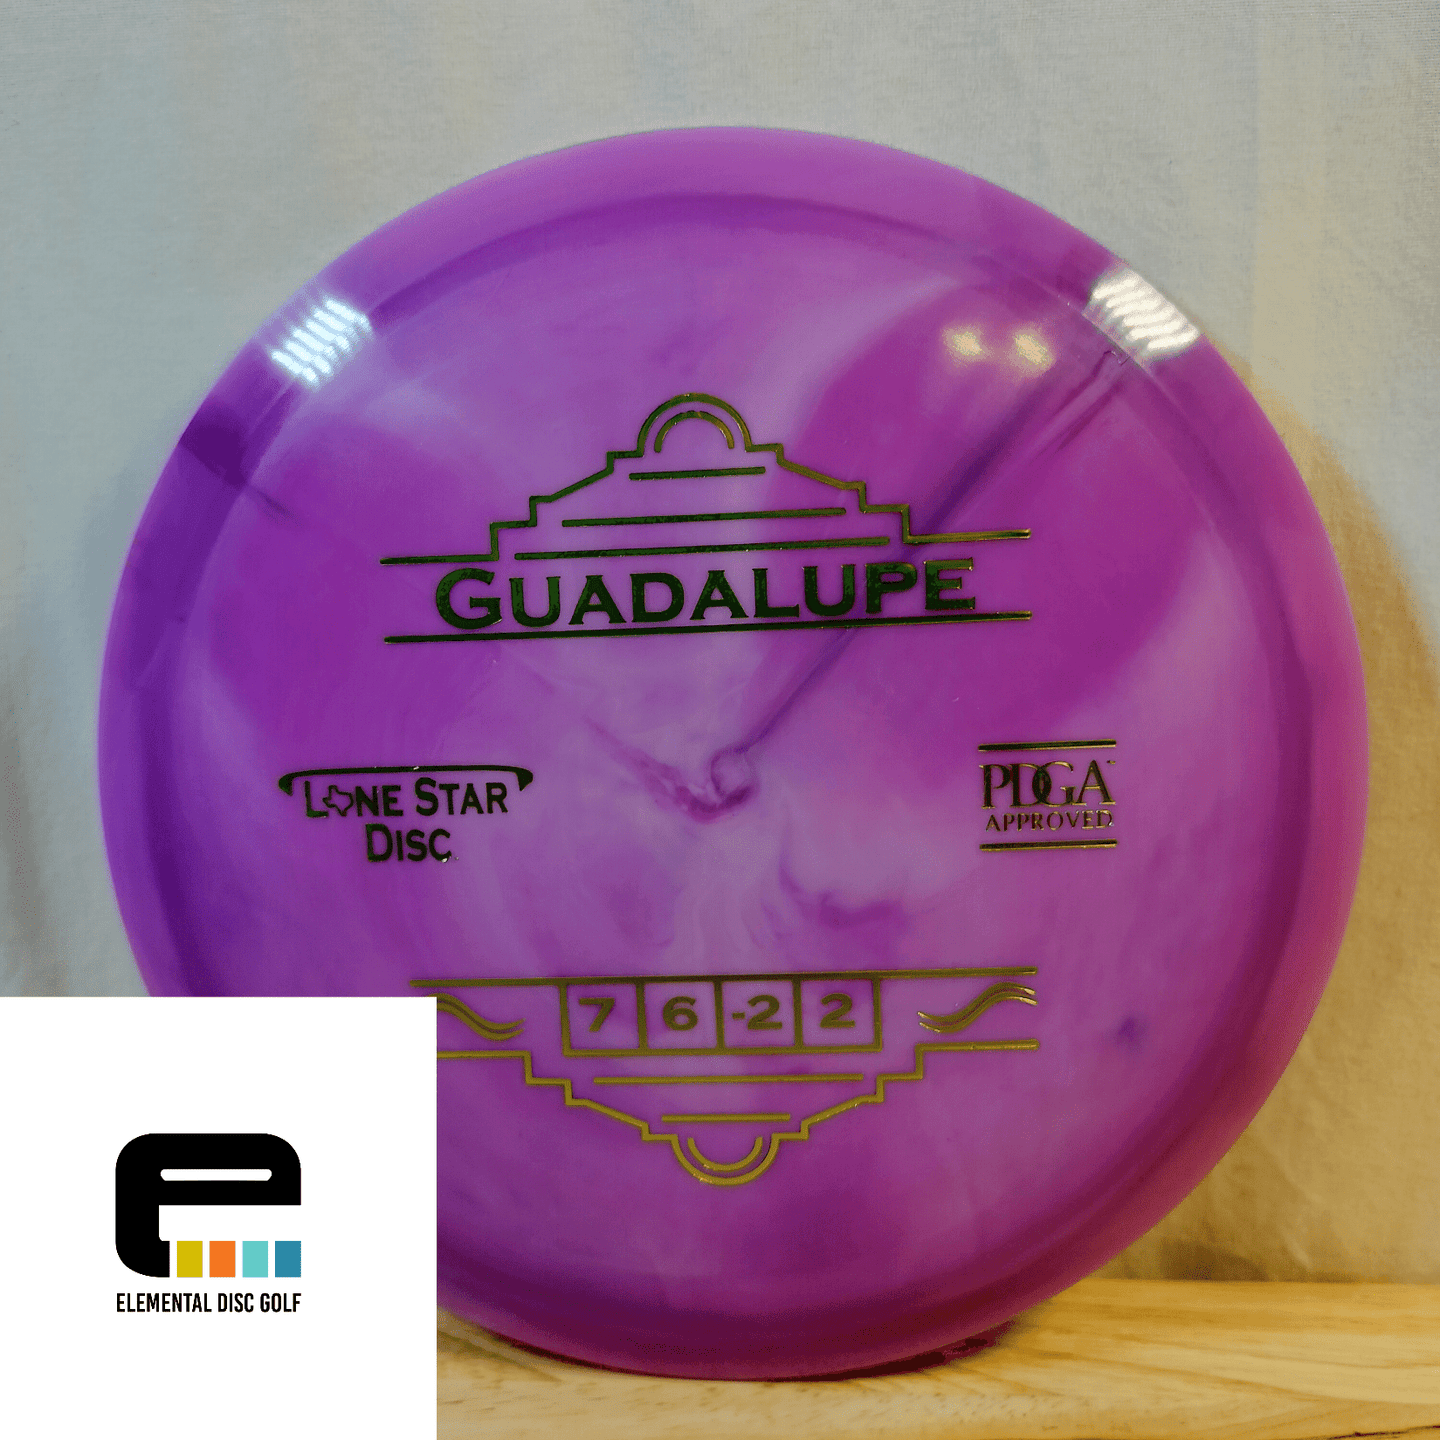 Lone Star Alpha Guadalupe - Elemental Disc Golf